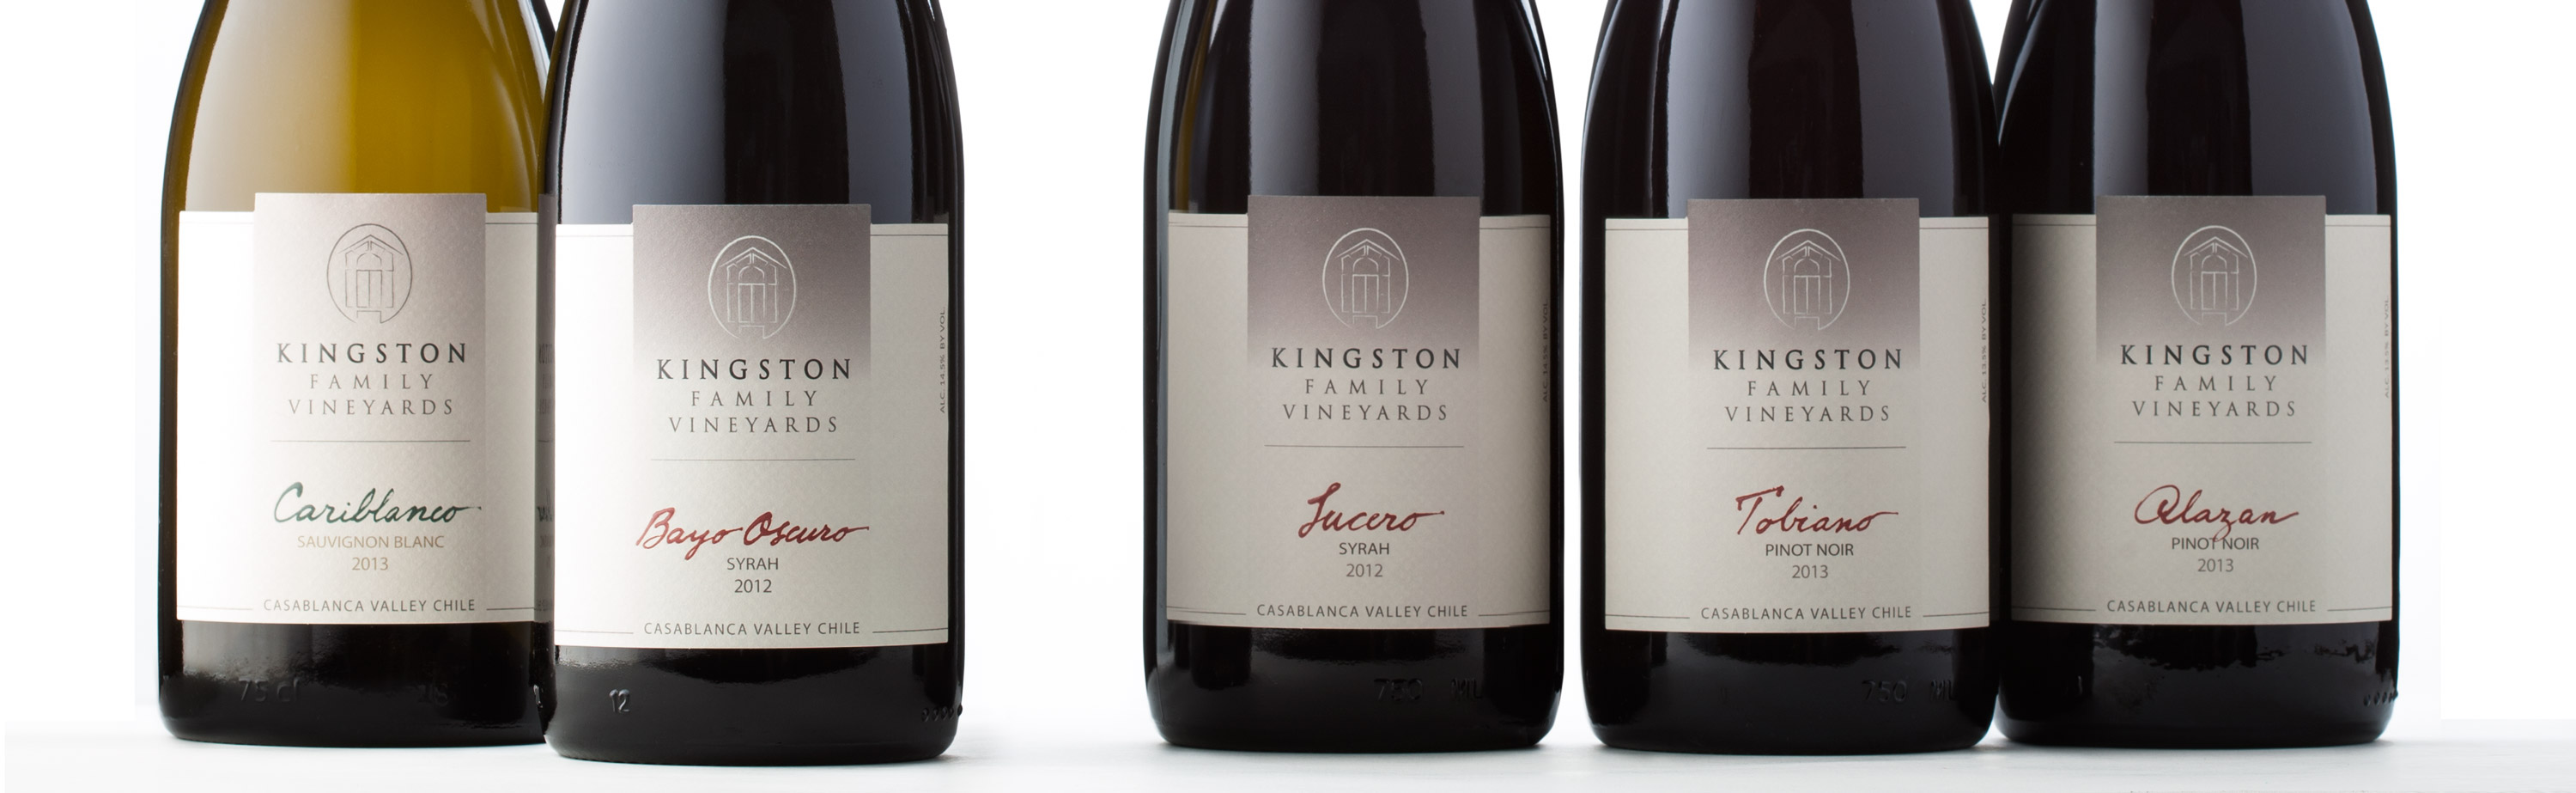 New Kingston Wine Labels